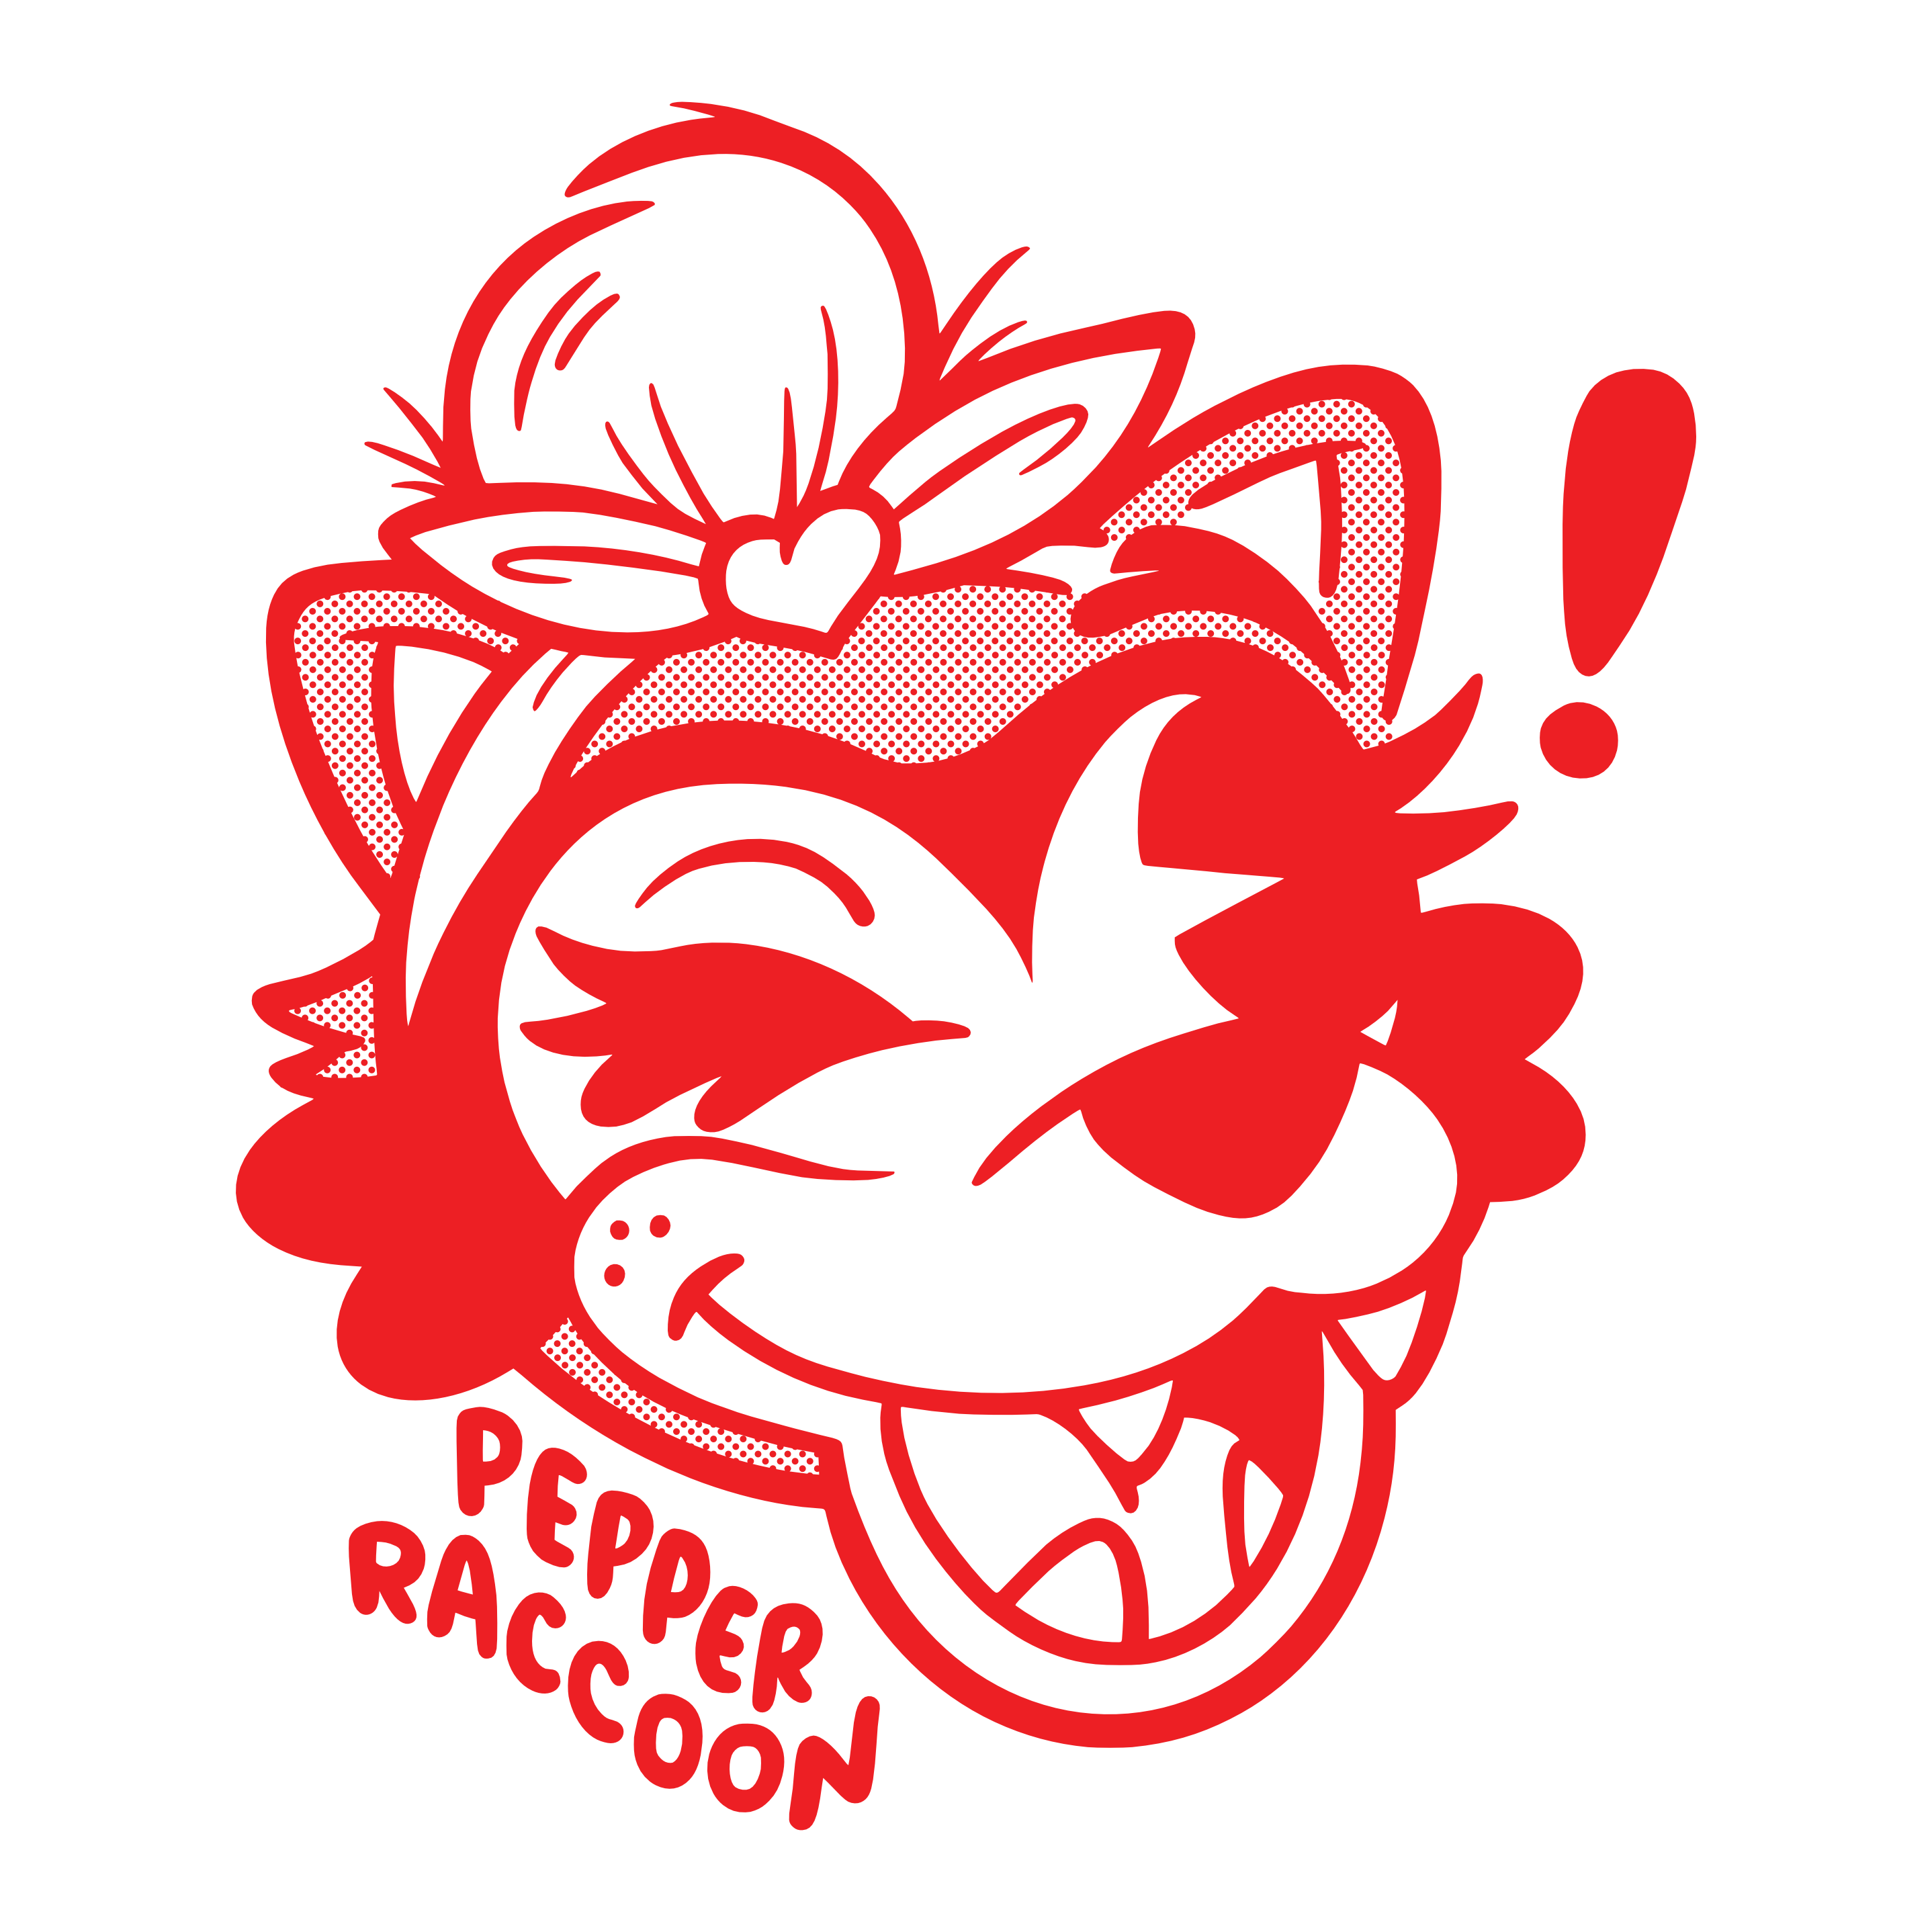 Pepper Raccoon logo